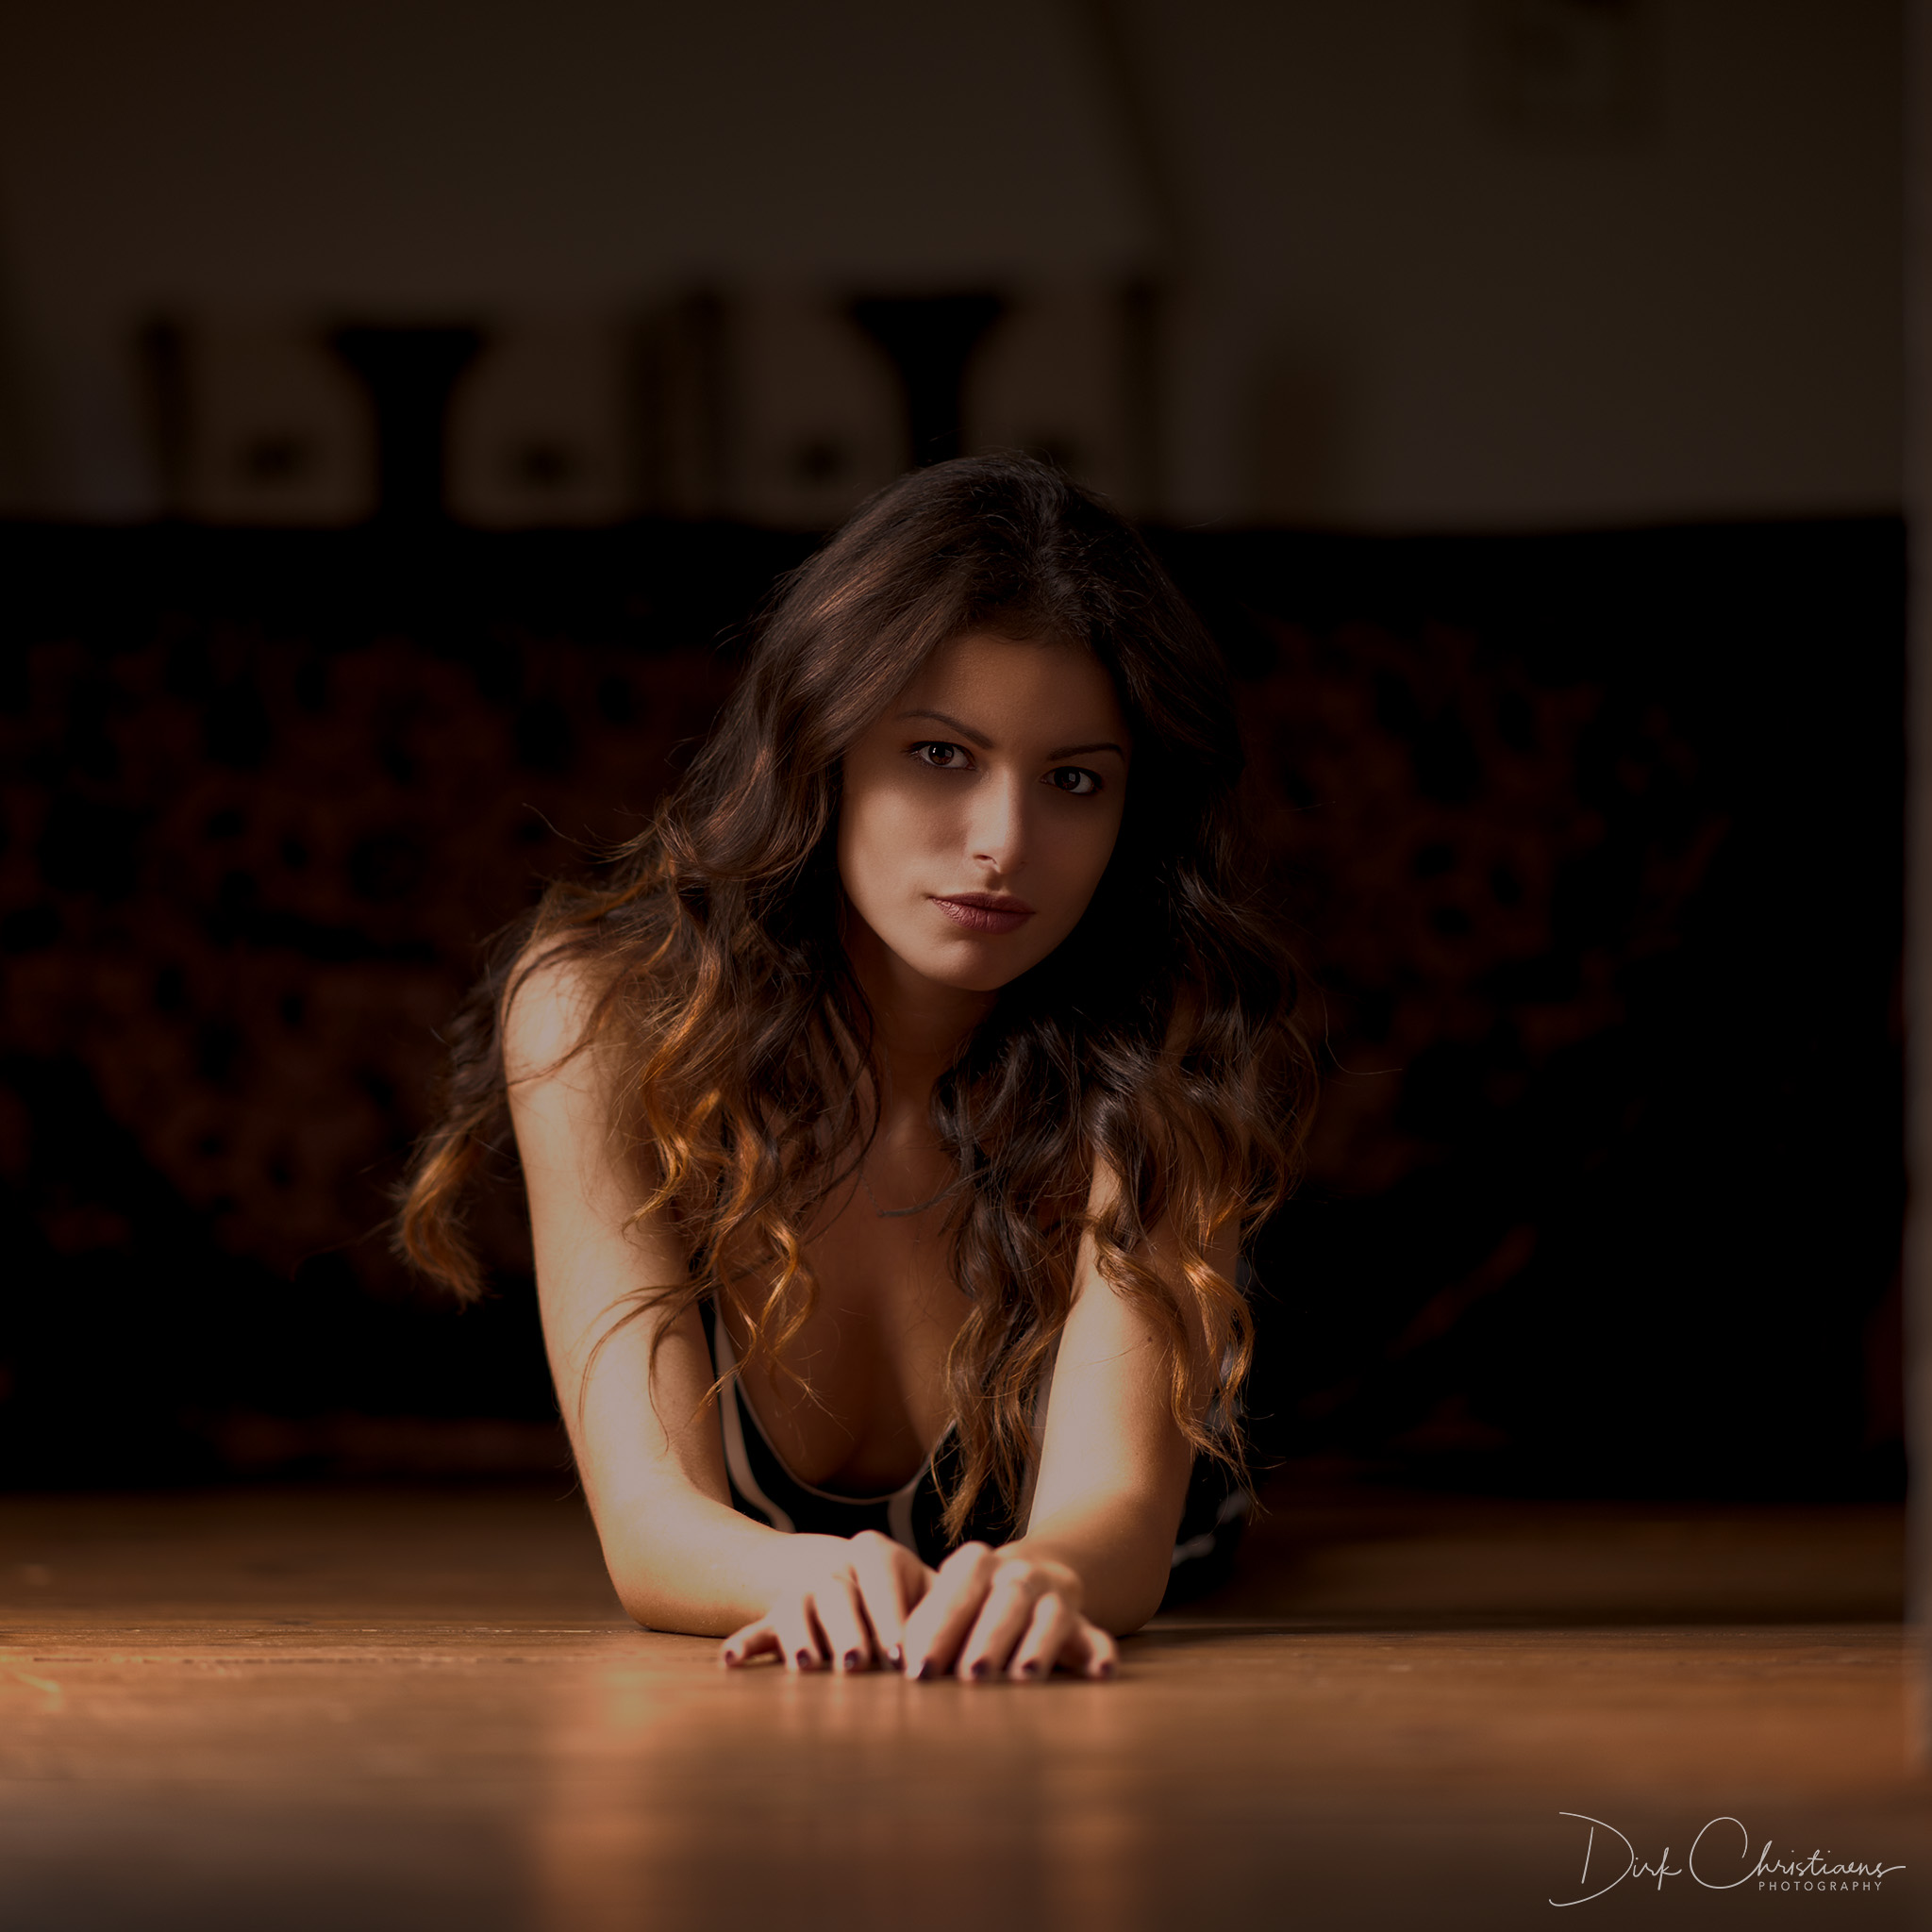 Jessica Koritnik, model from Belgium at a boudoir photoshoot